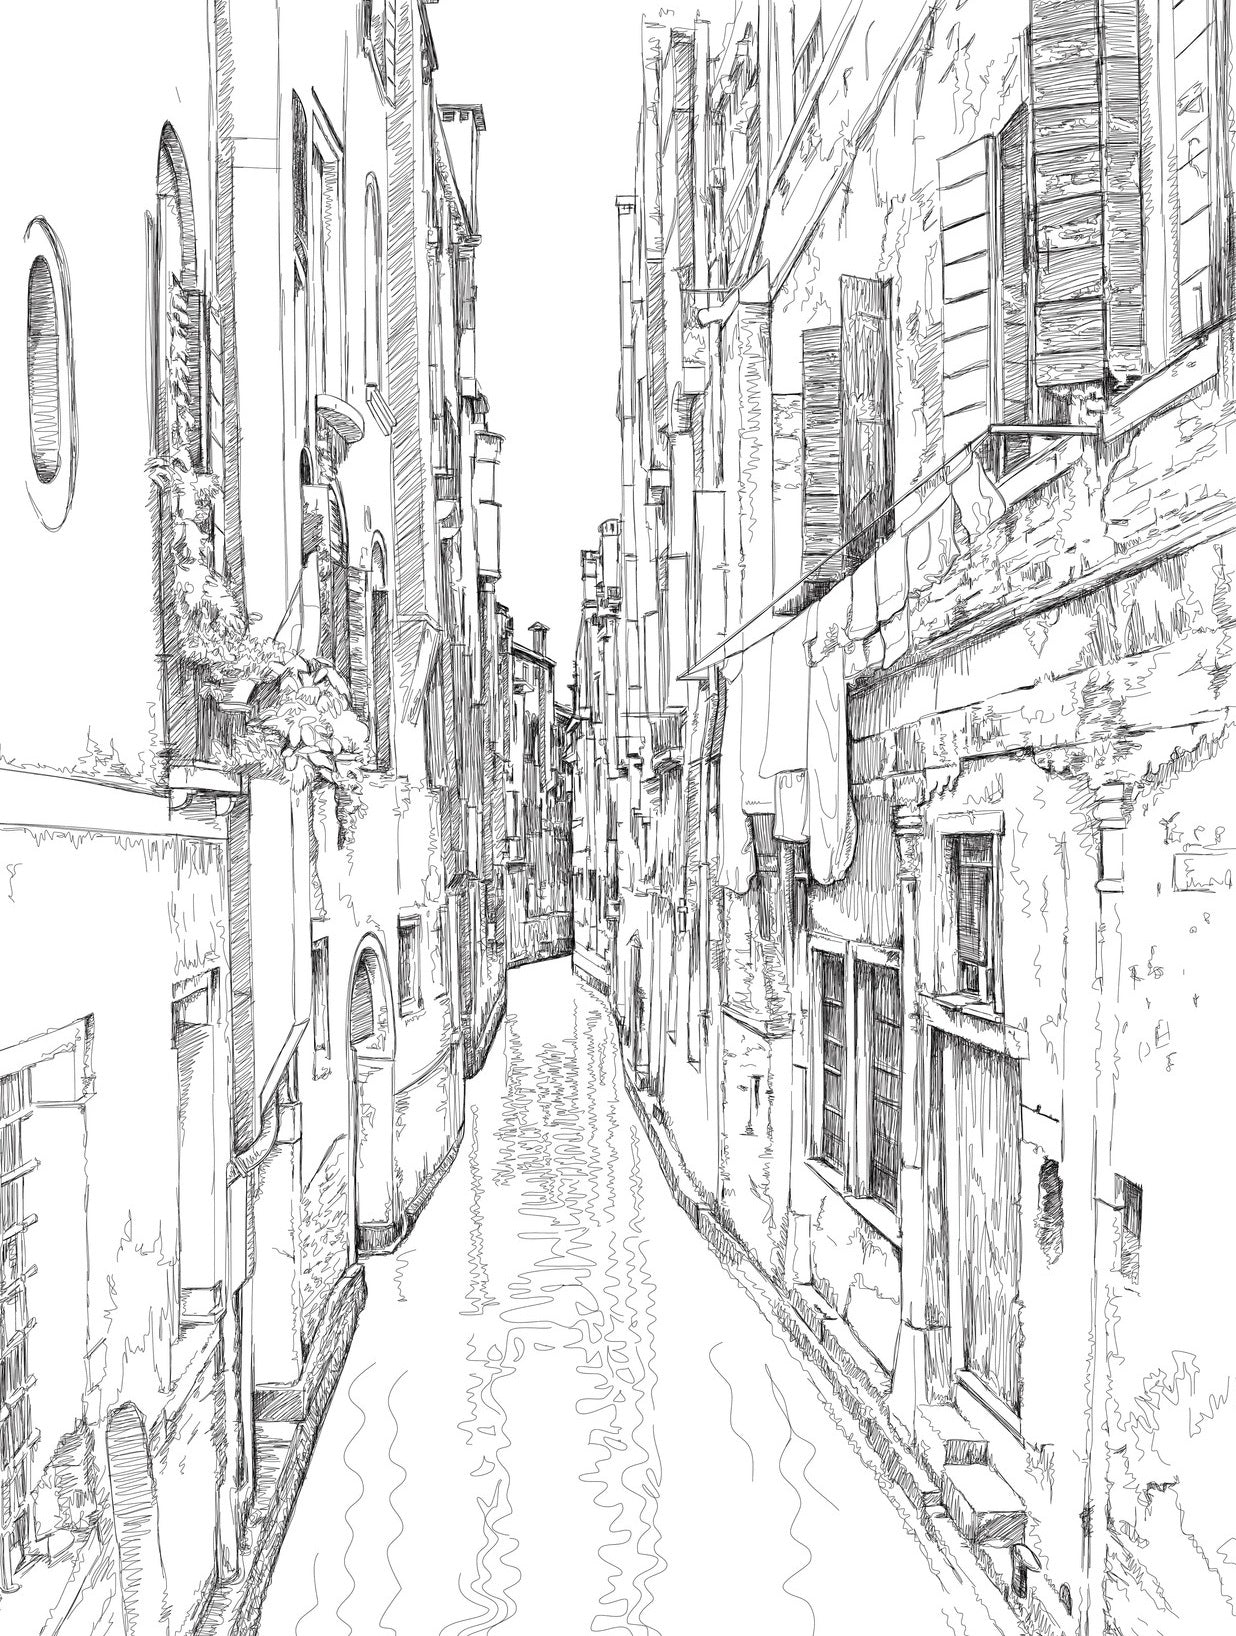 Venice Moments - Coloring Book With Romantic Canals, Renaissance Architecture & Gondolas 